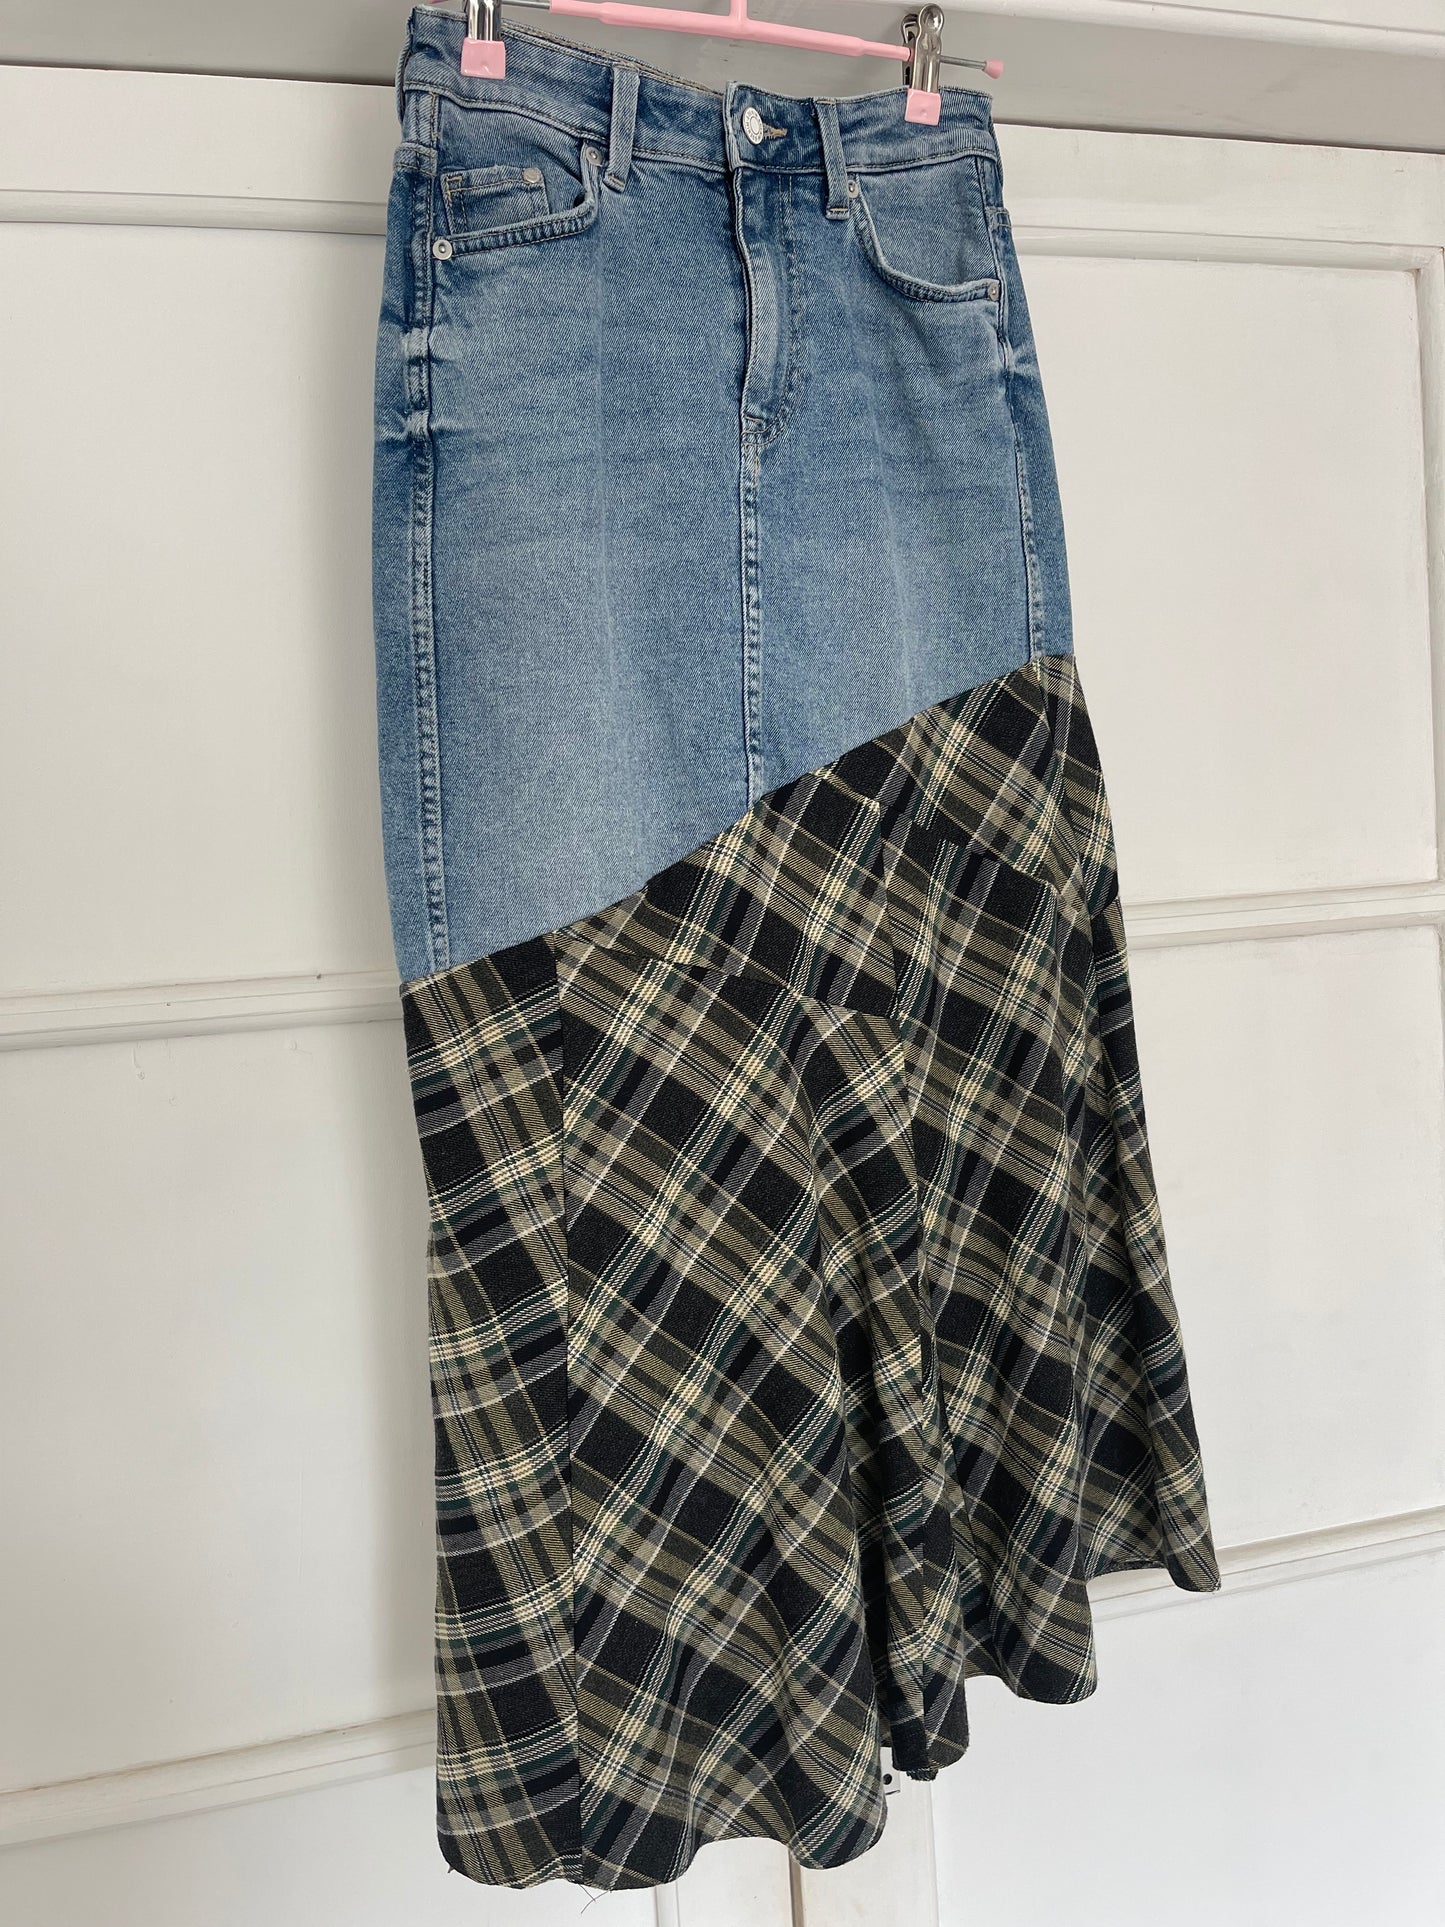 Upcycled denim and tartan skirt